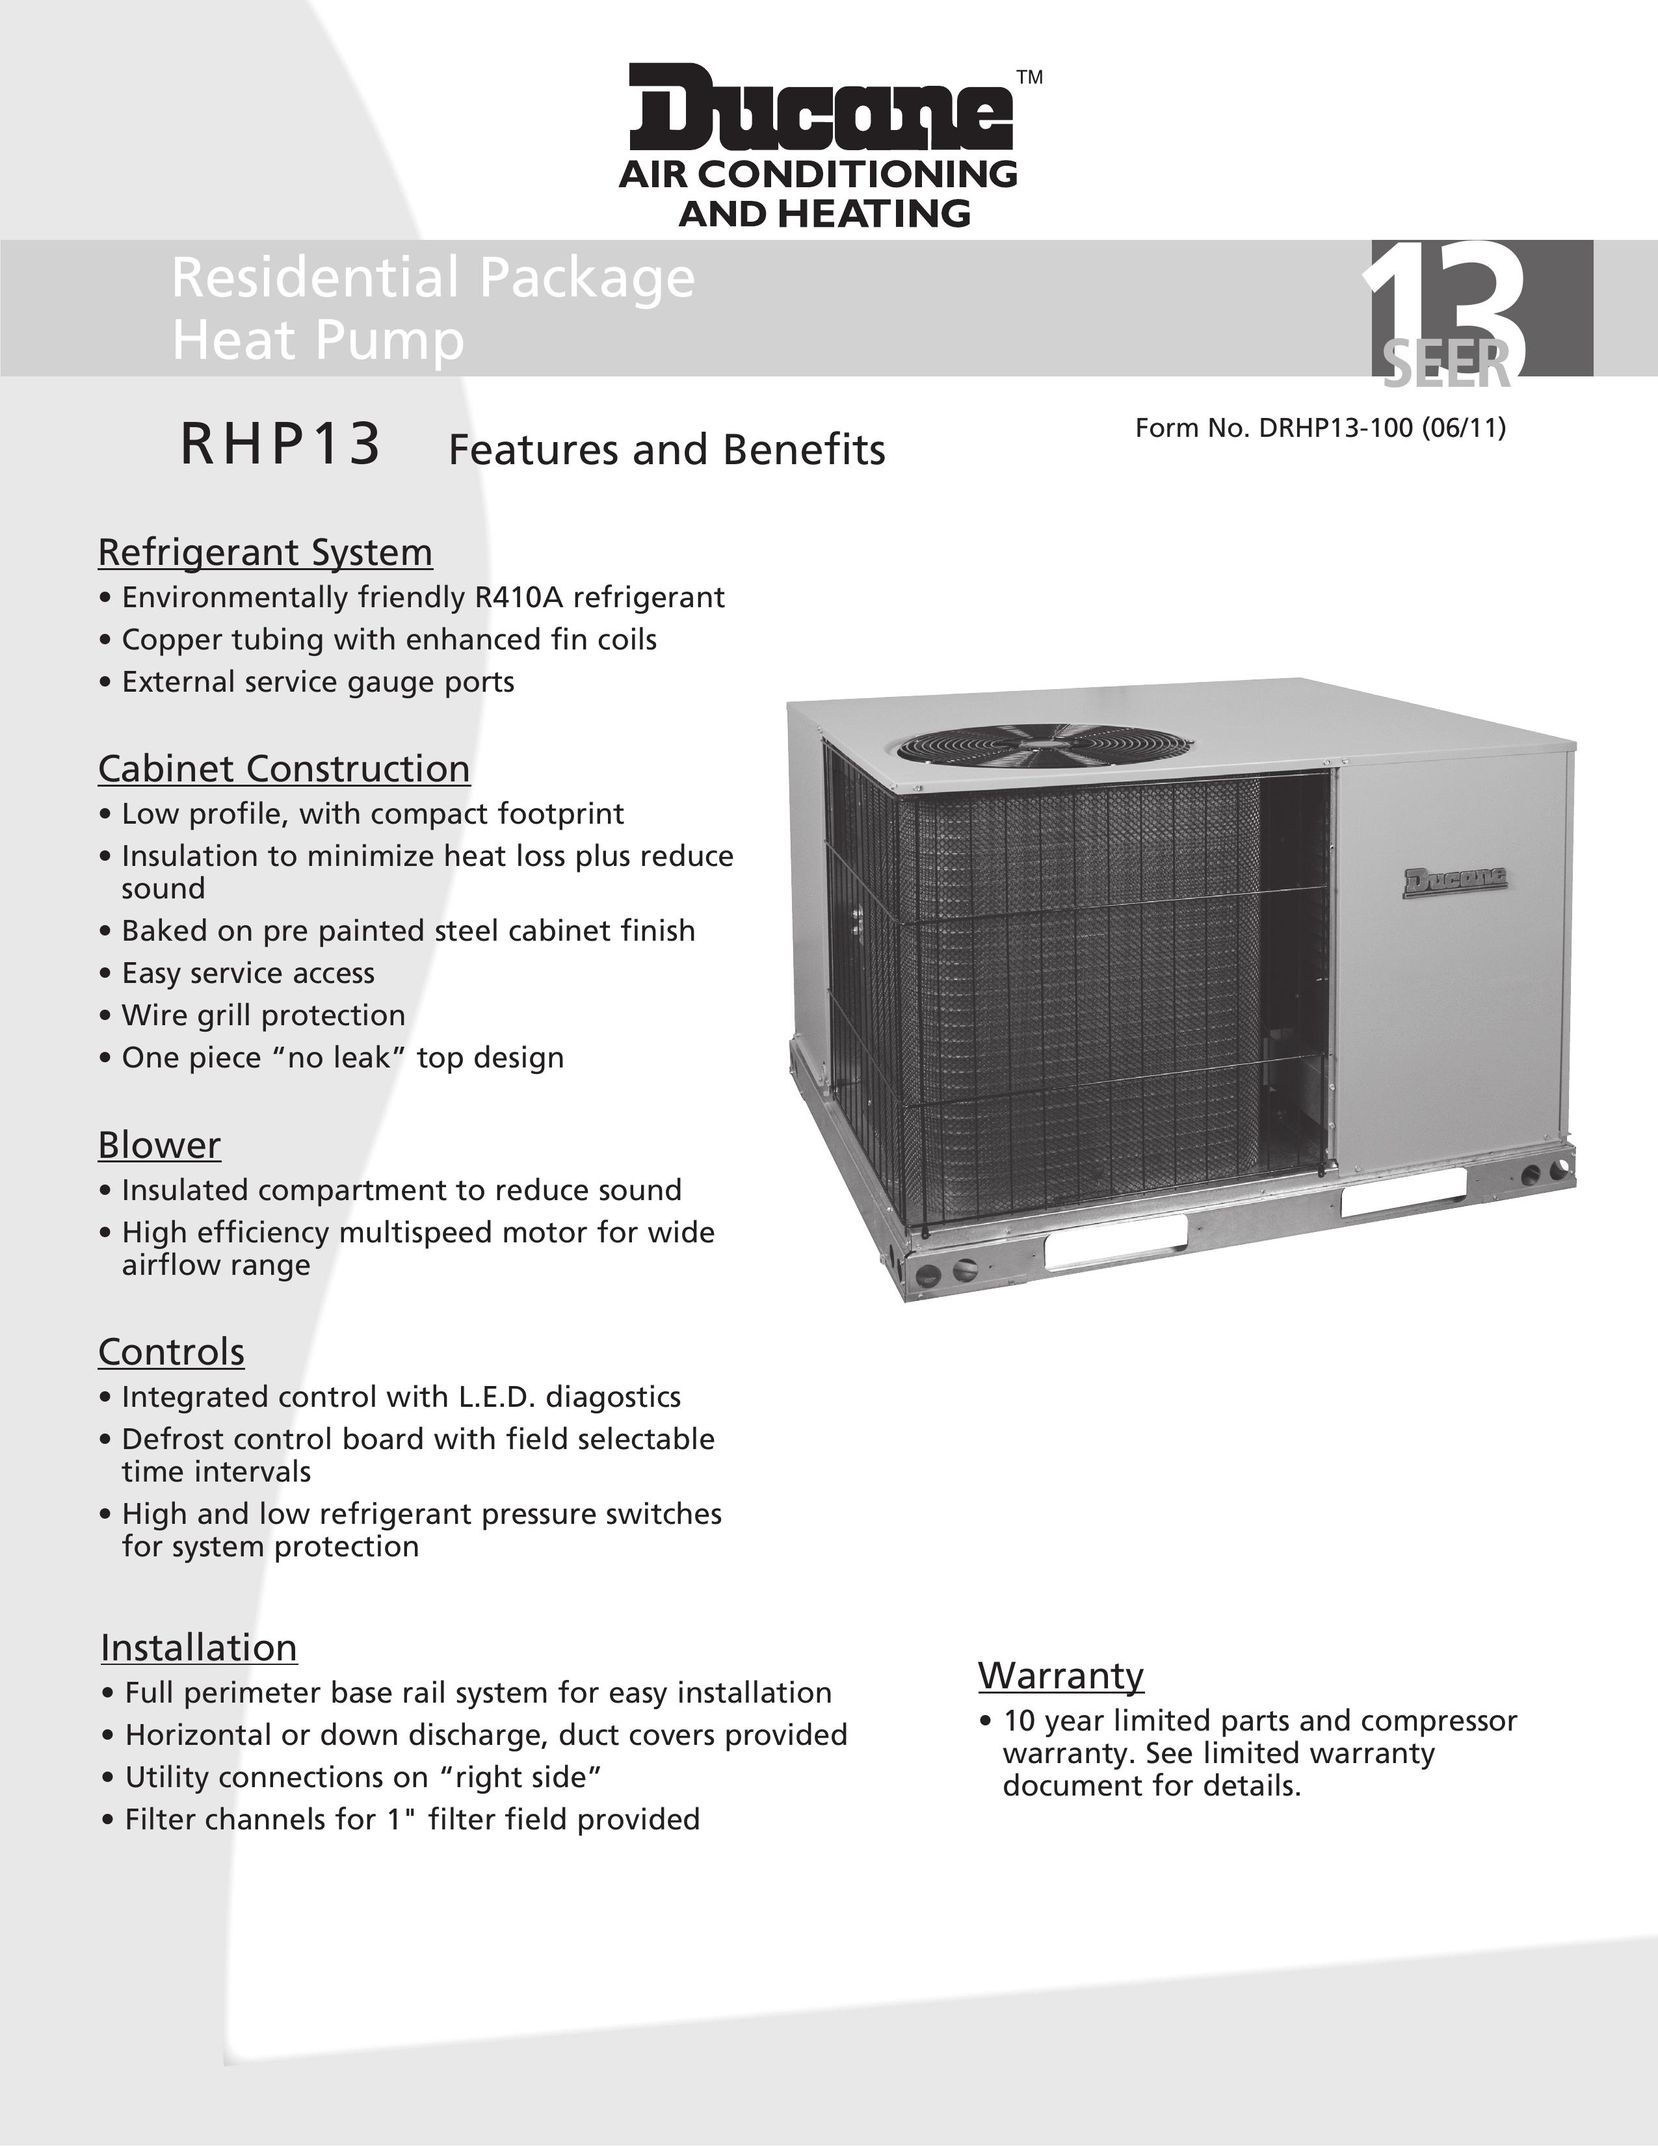 Ducane RHP13 Air Conditioner User Manual